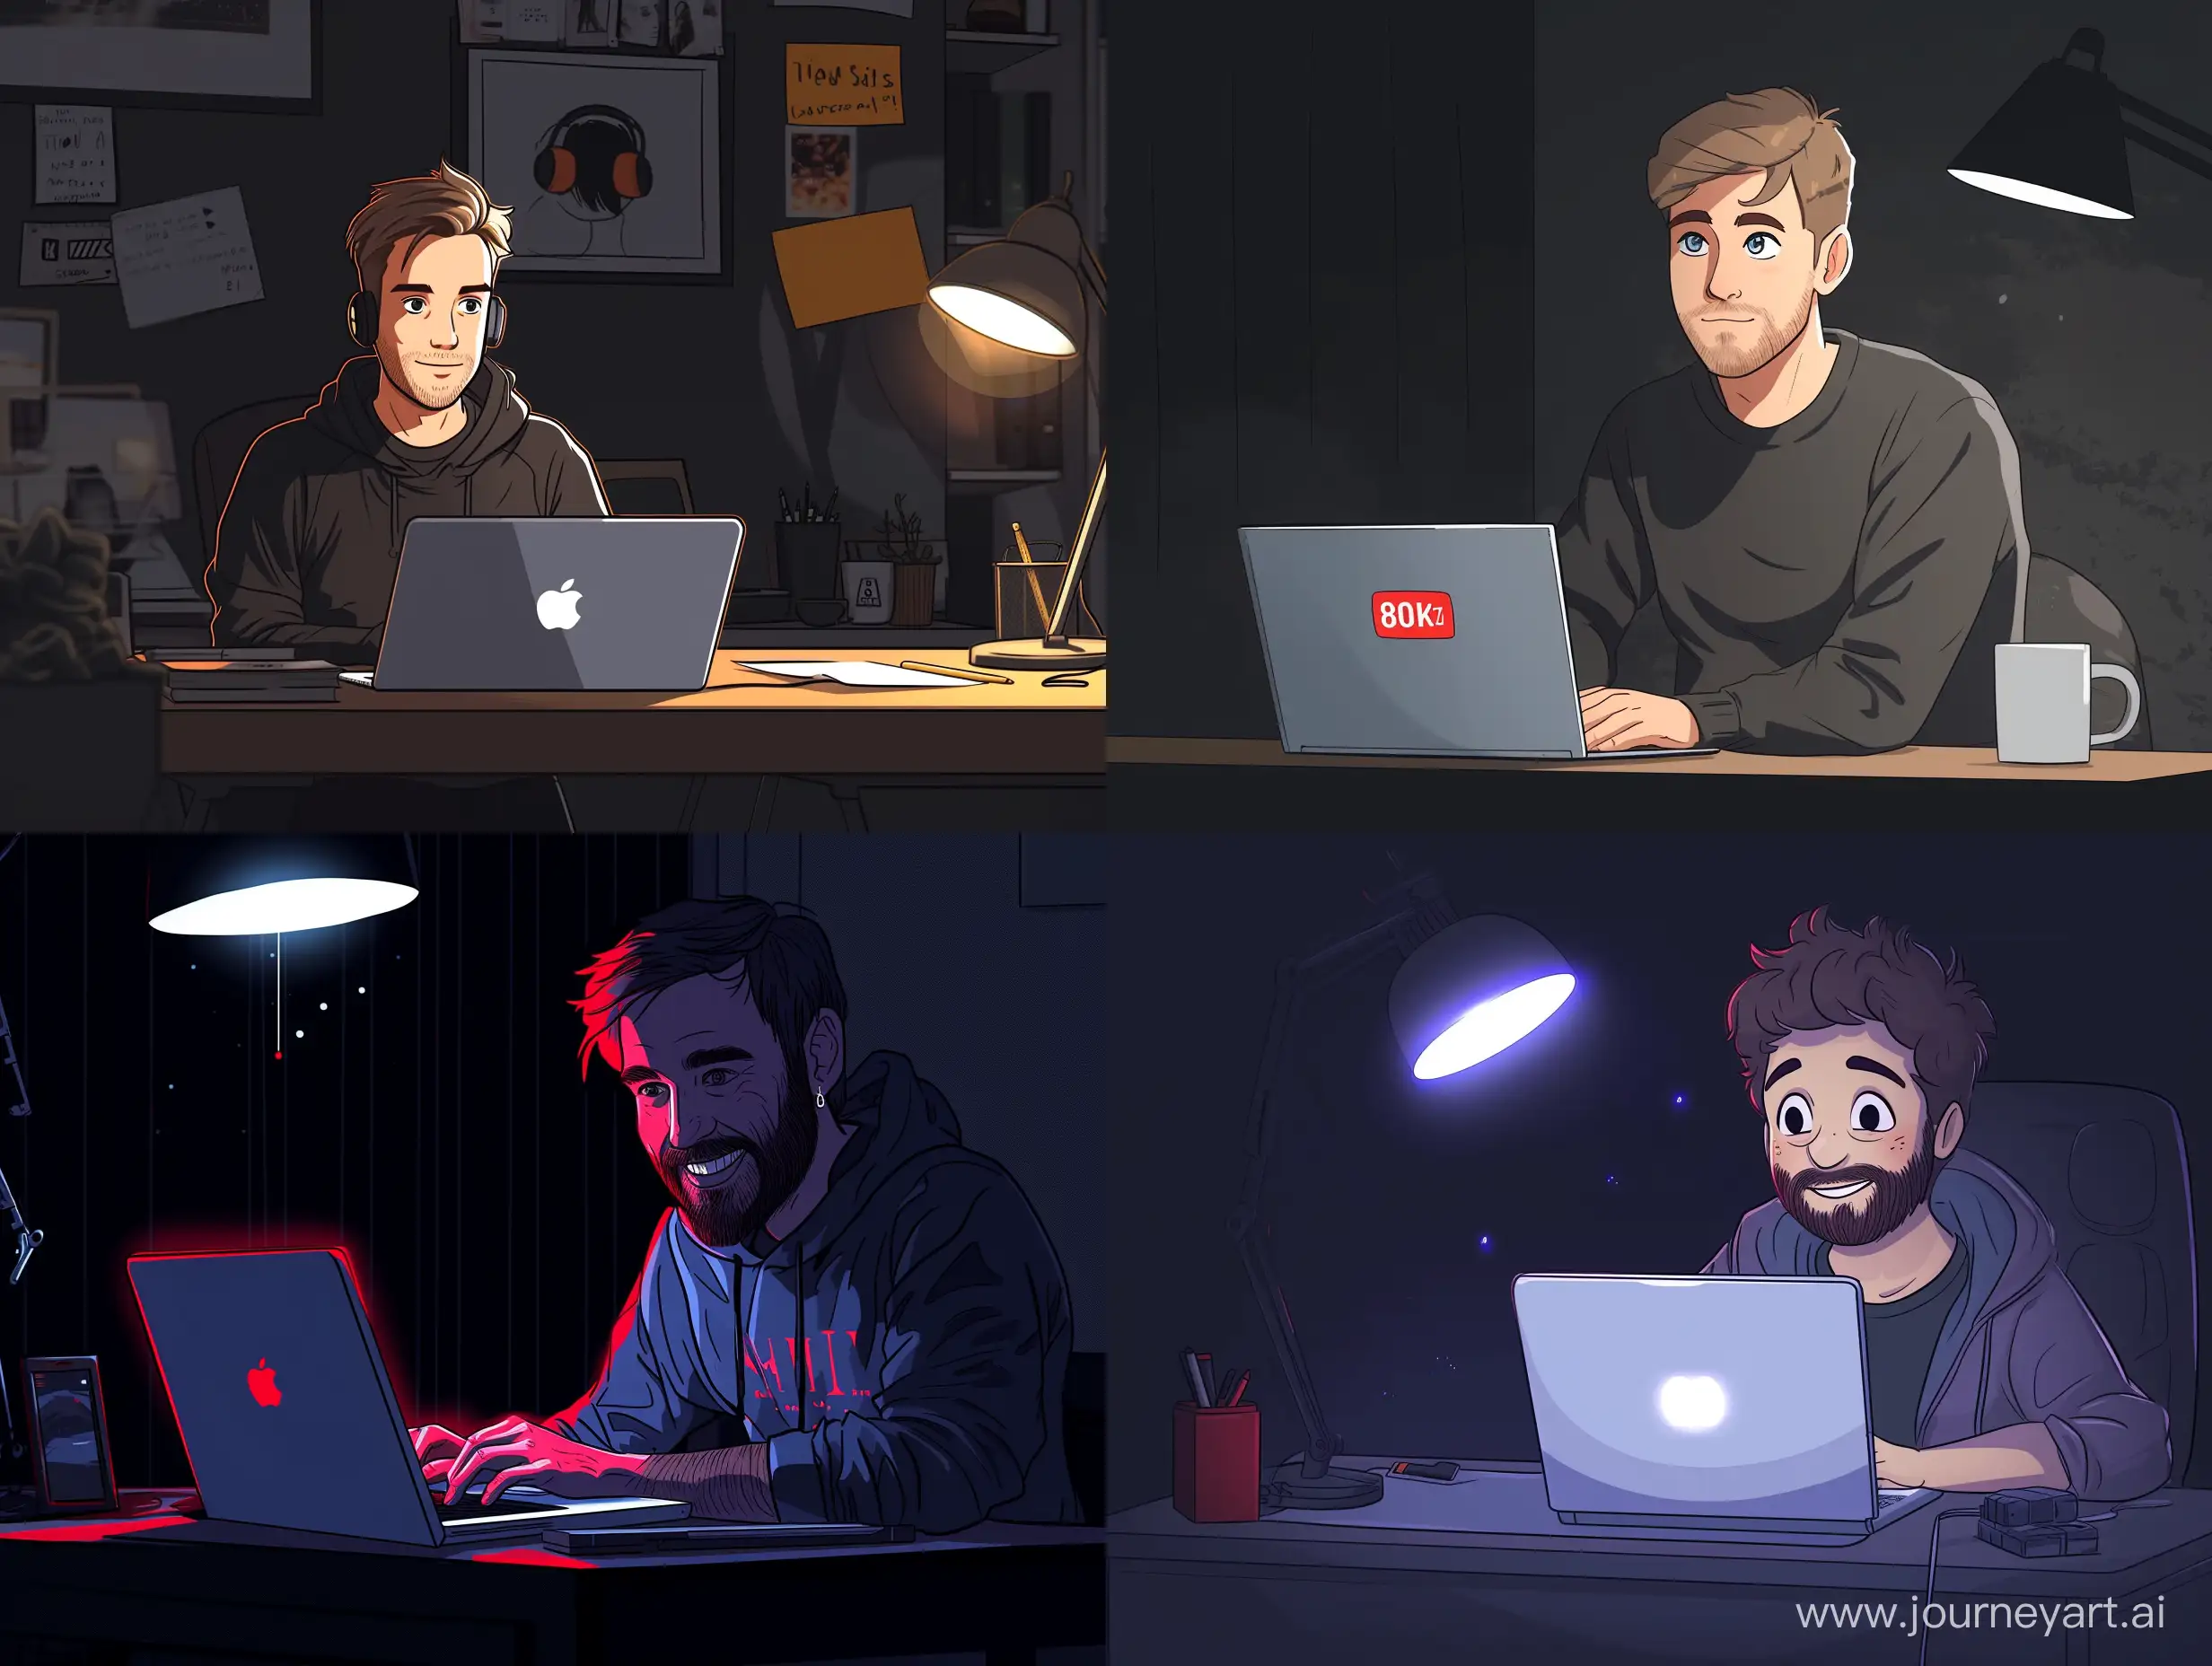 Charming-Cartoon-YouTuber-Creating-Art-on-HighQuality-Laptop-in-Dimly-Lit-Studio